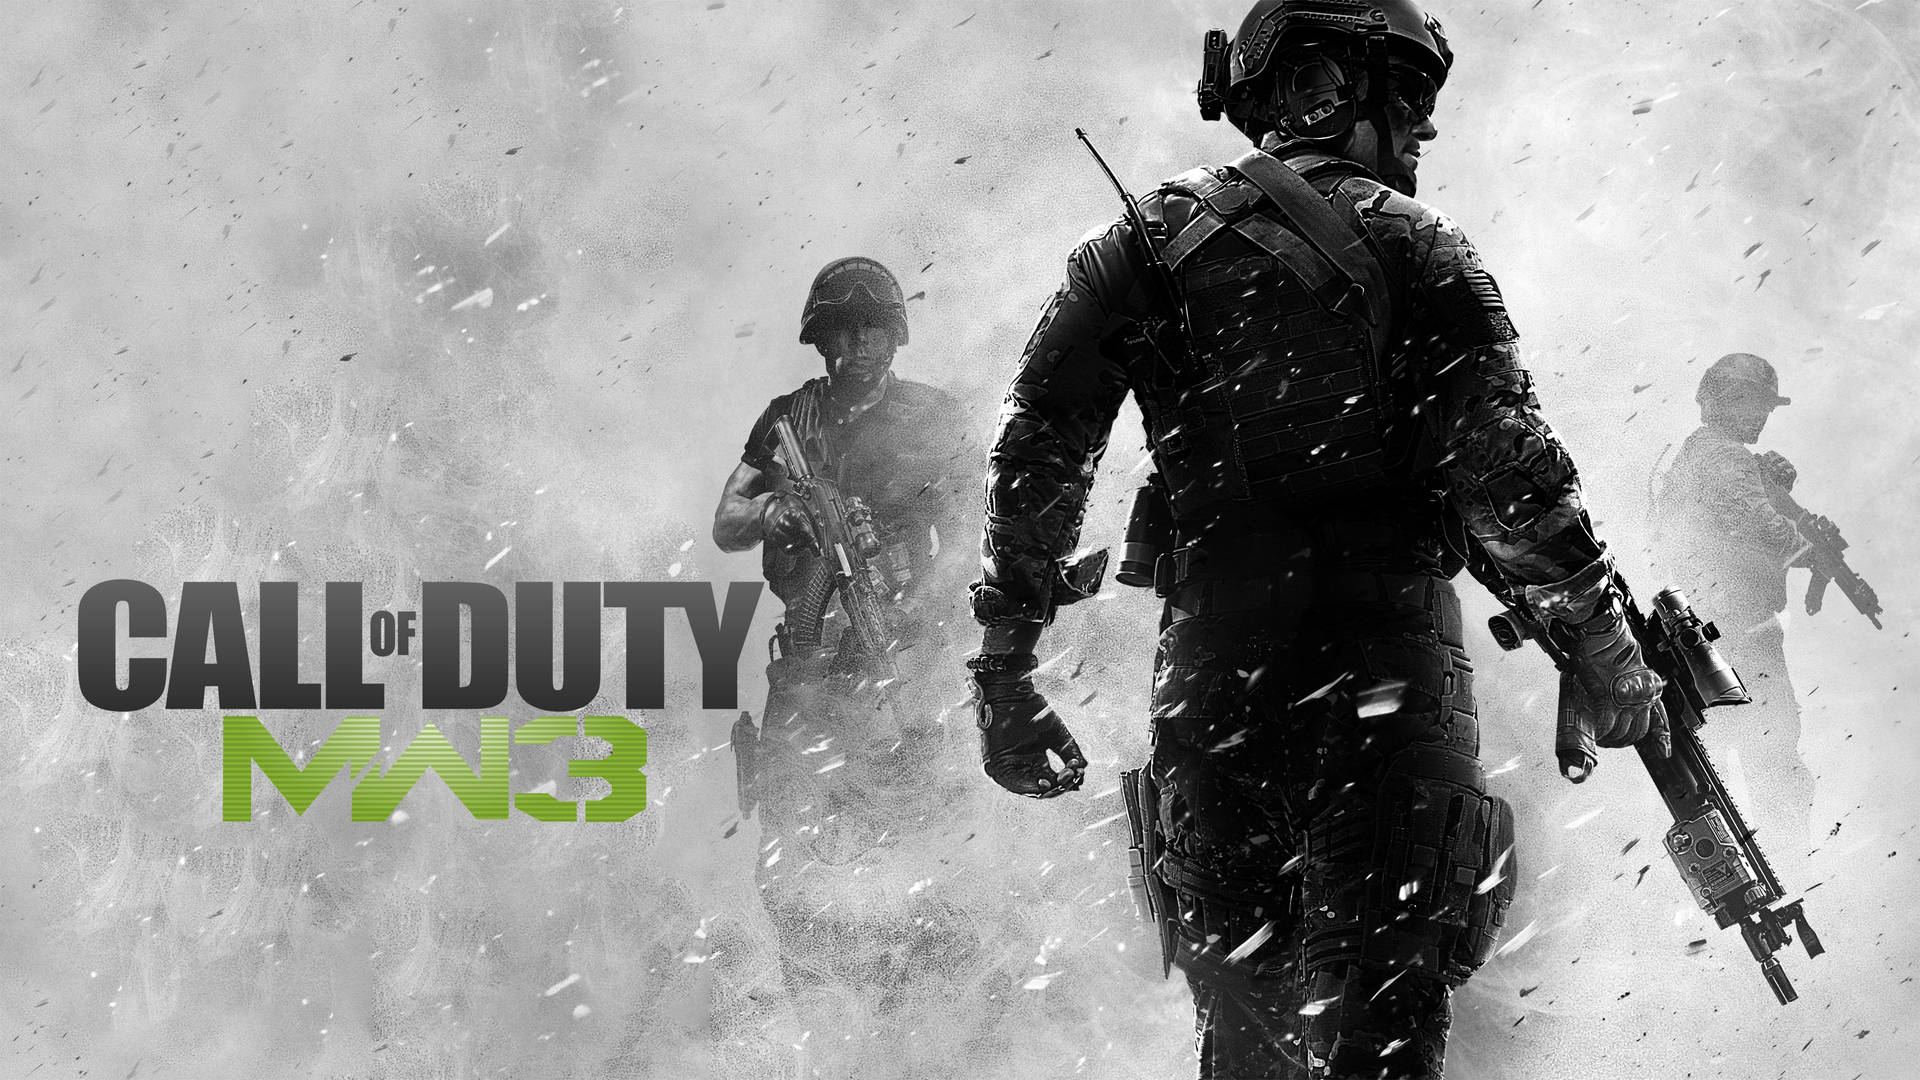 Call Of Duty Mw3 Digital Poster Wallpaper